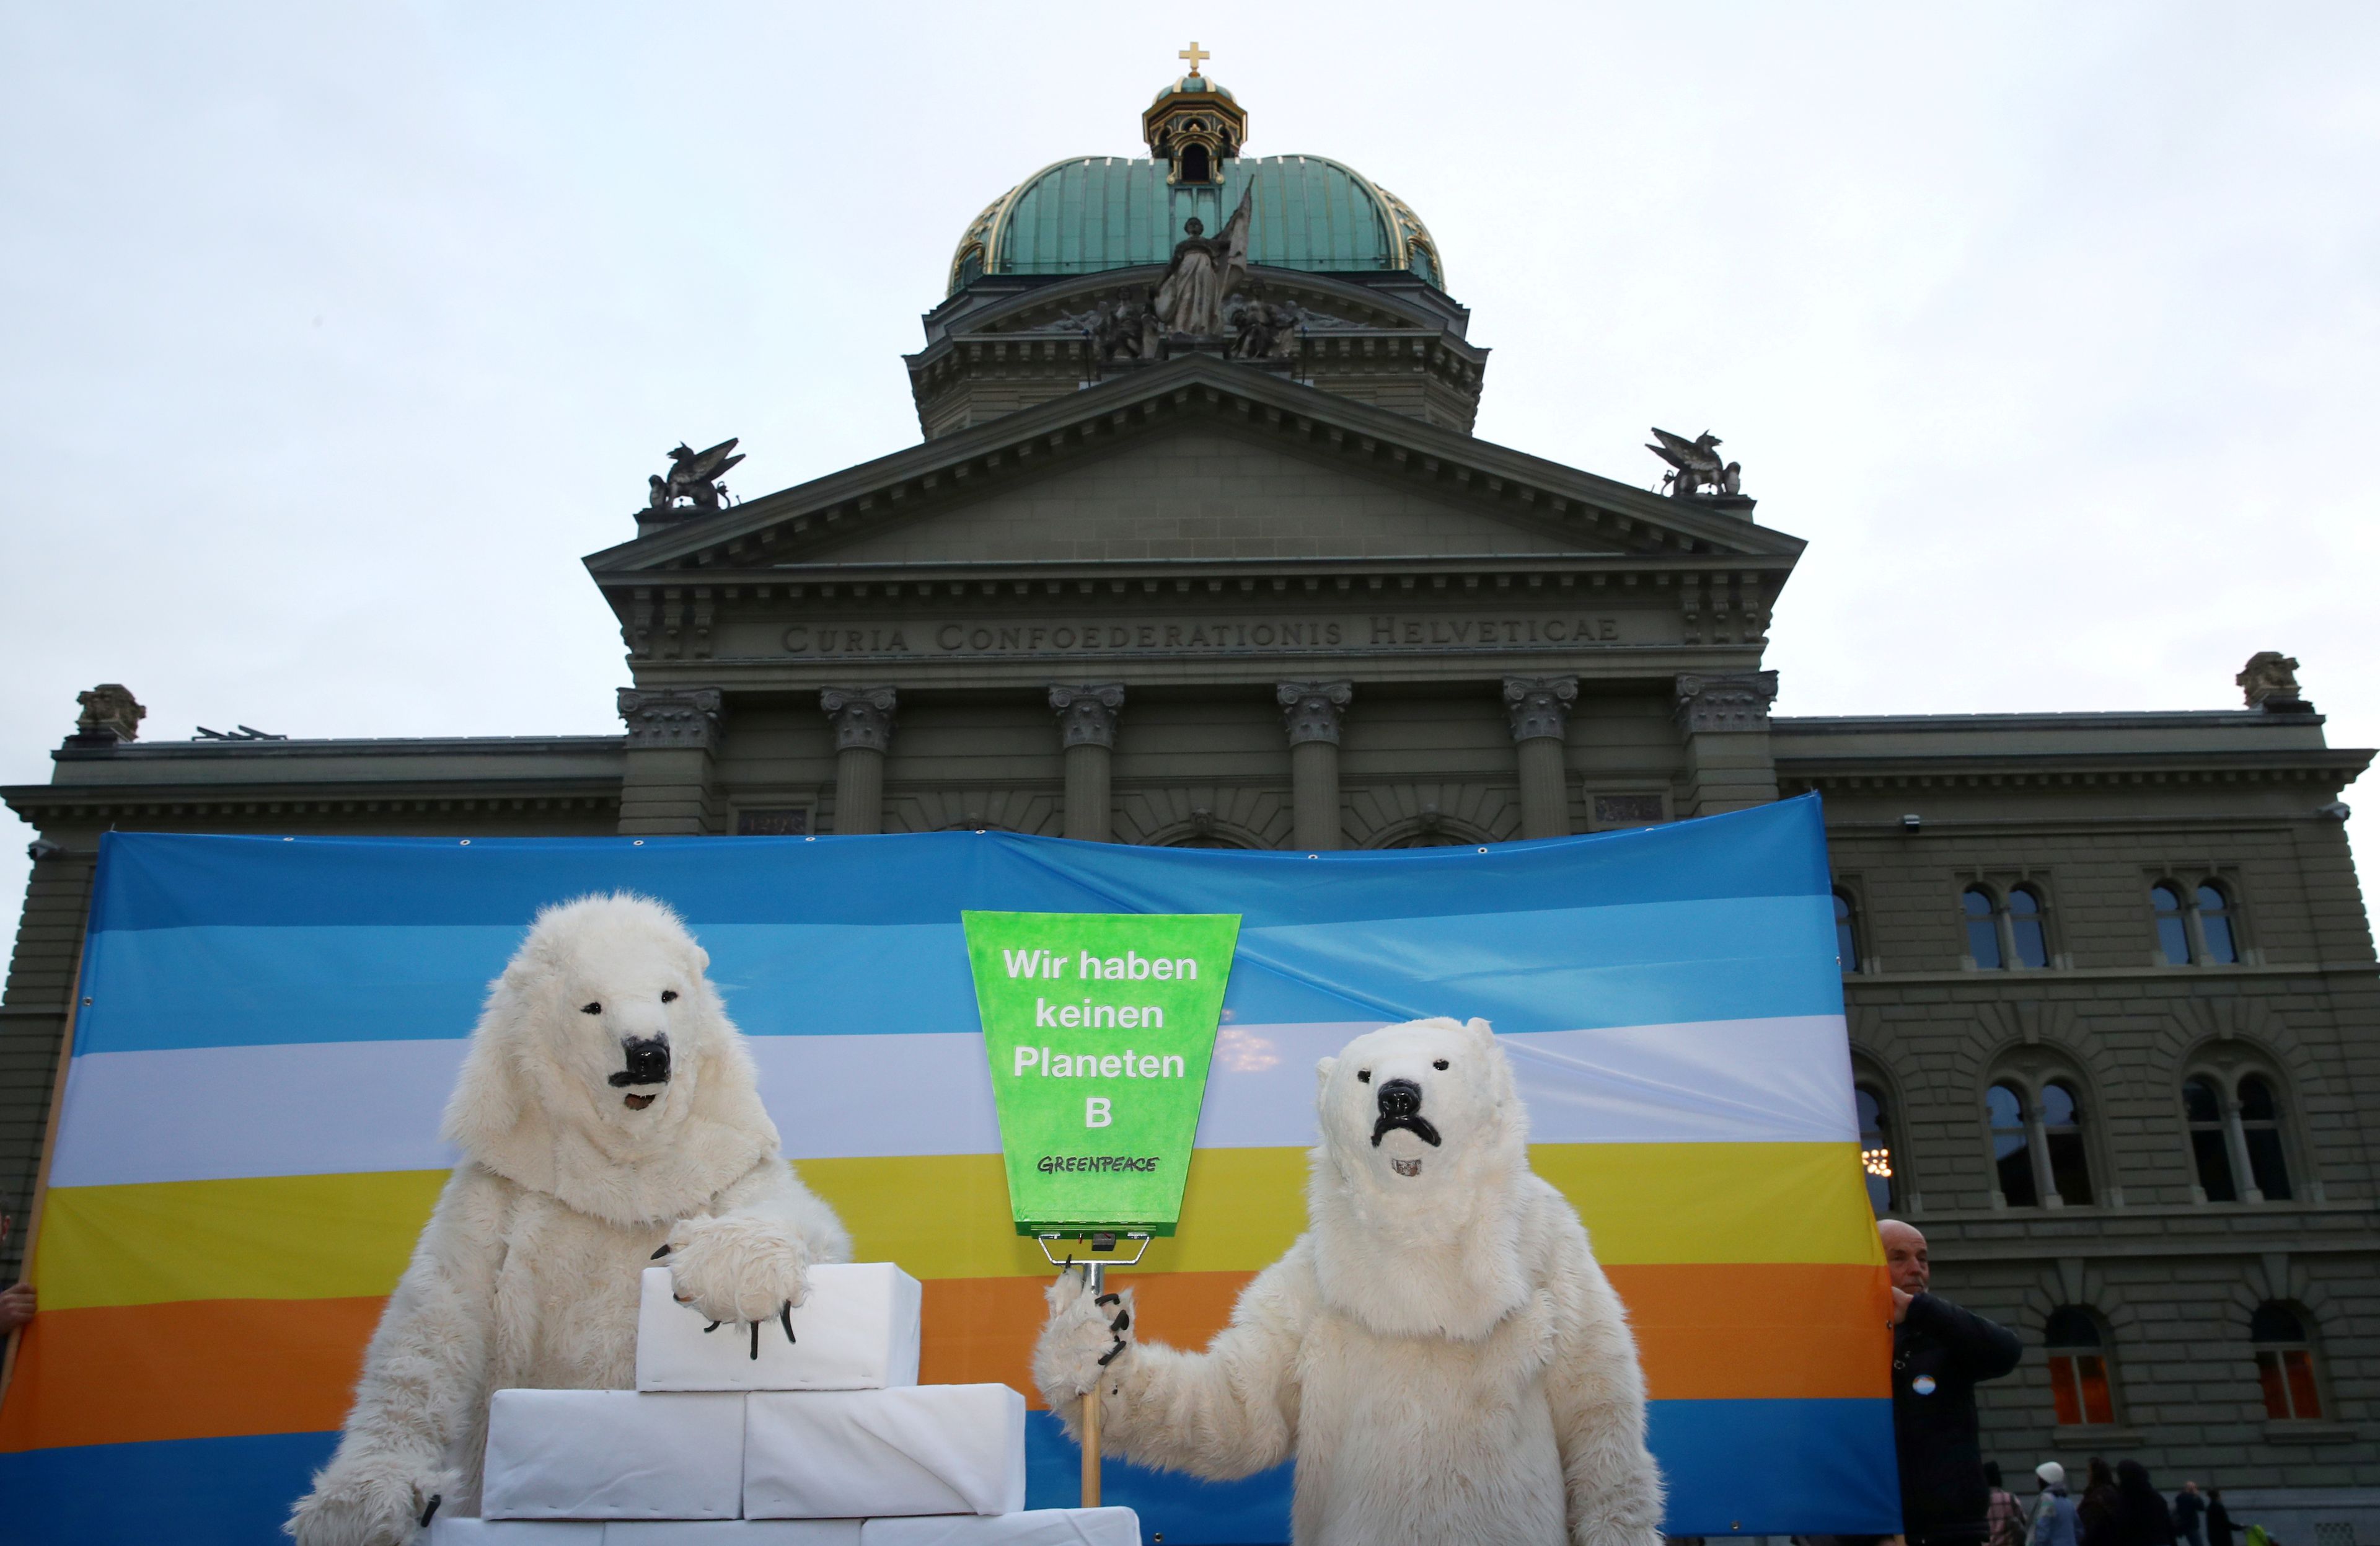 Accion Greenpeace Berlin